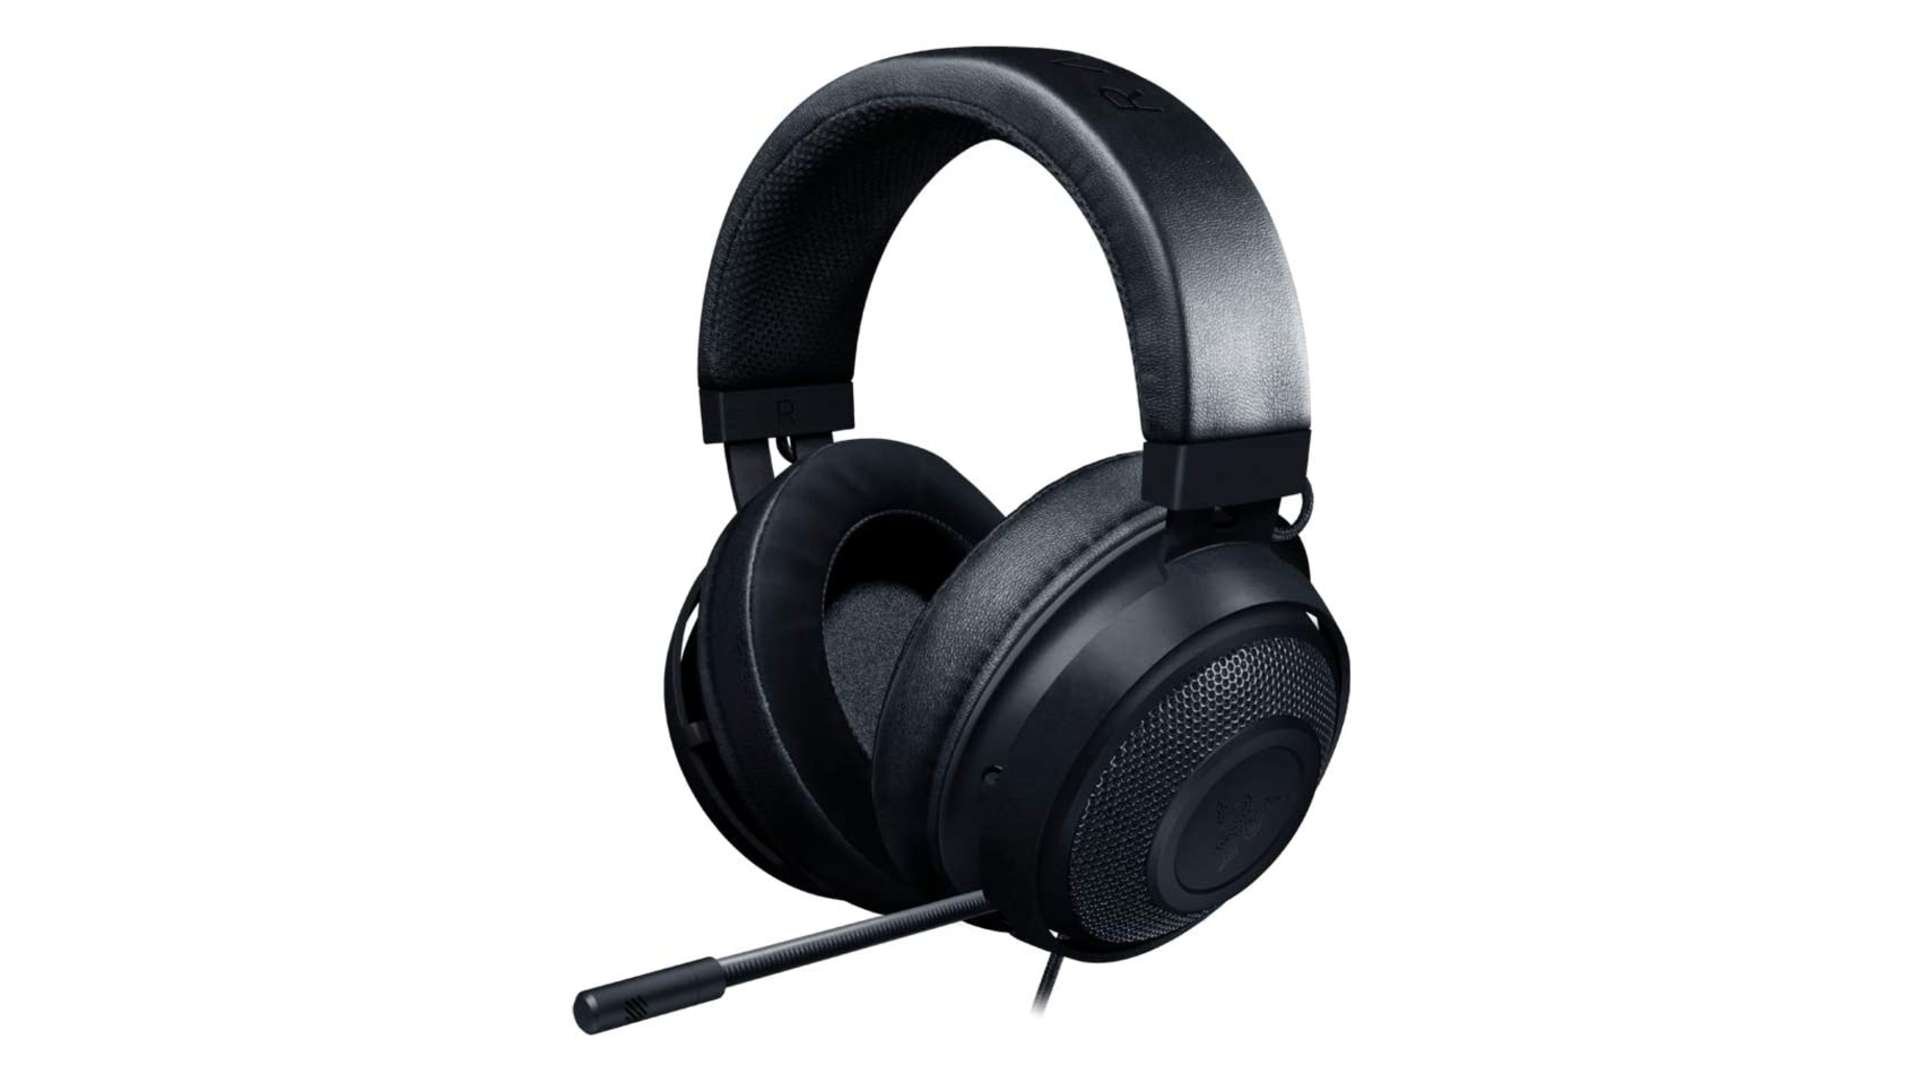 Razer's black-themed headset